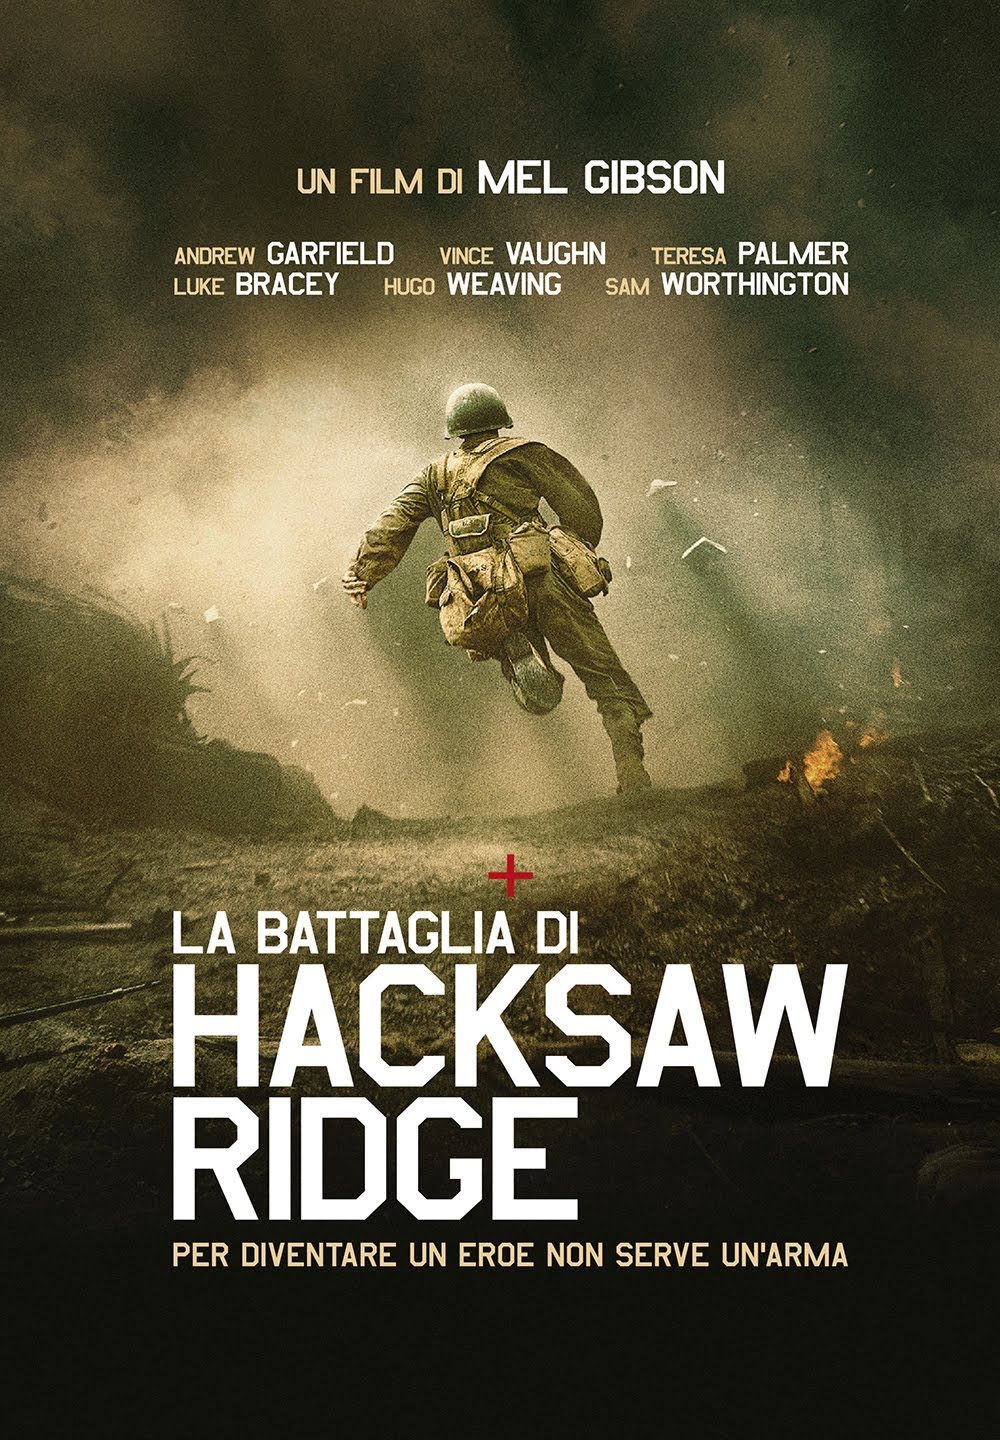 La battaglia di Hacksaw Ridge [HD] (2017)